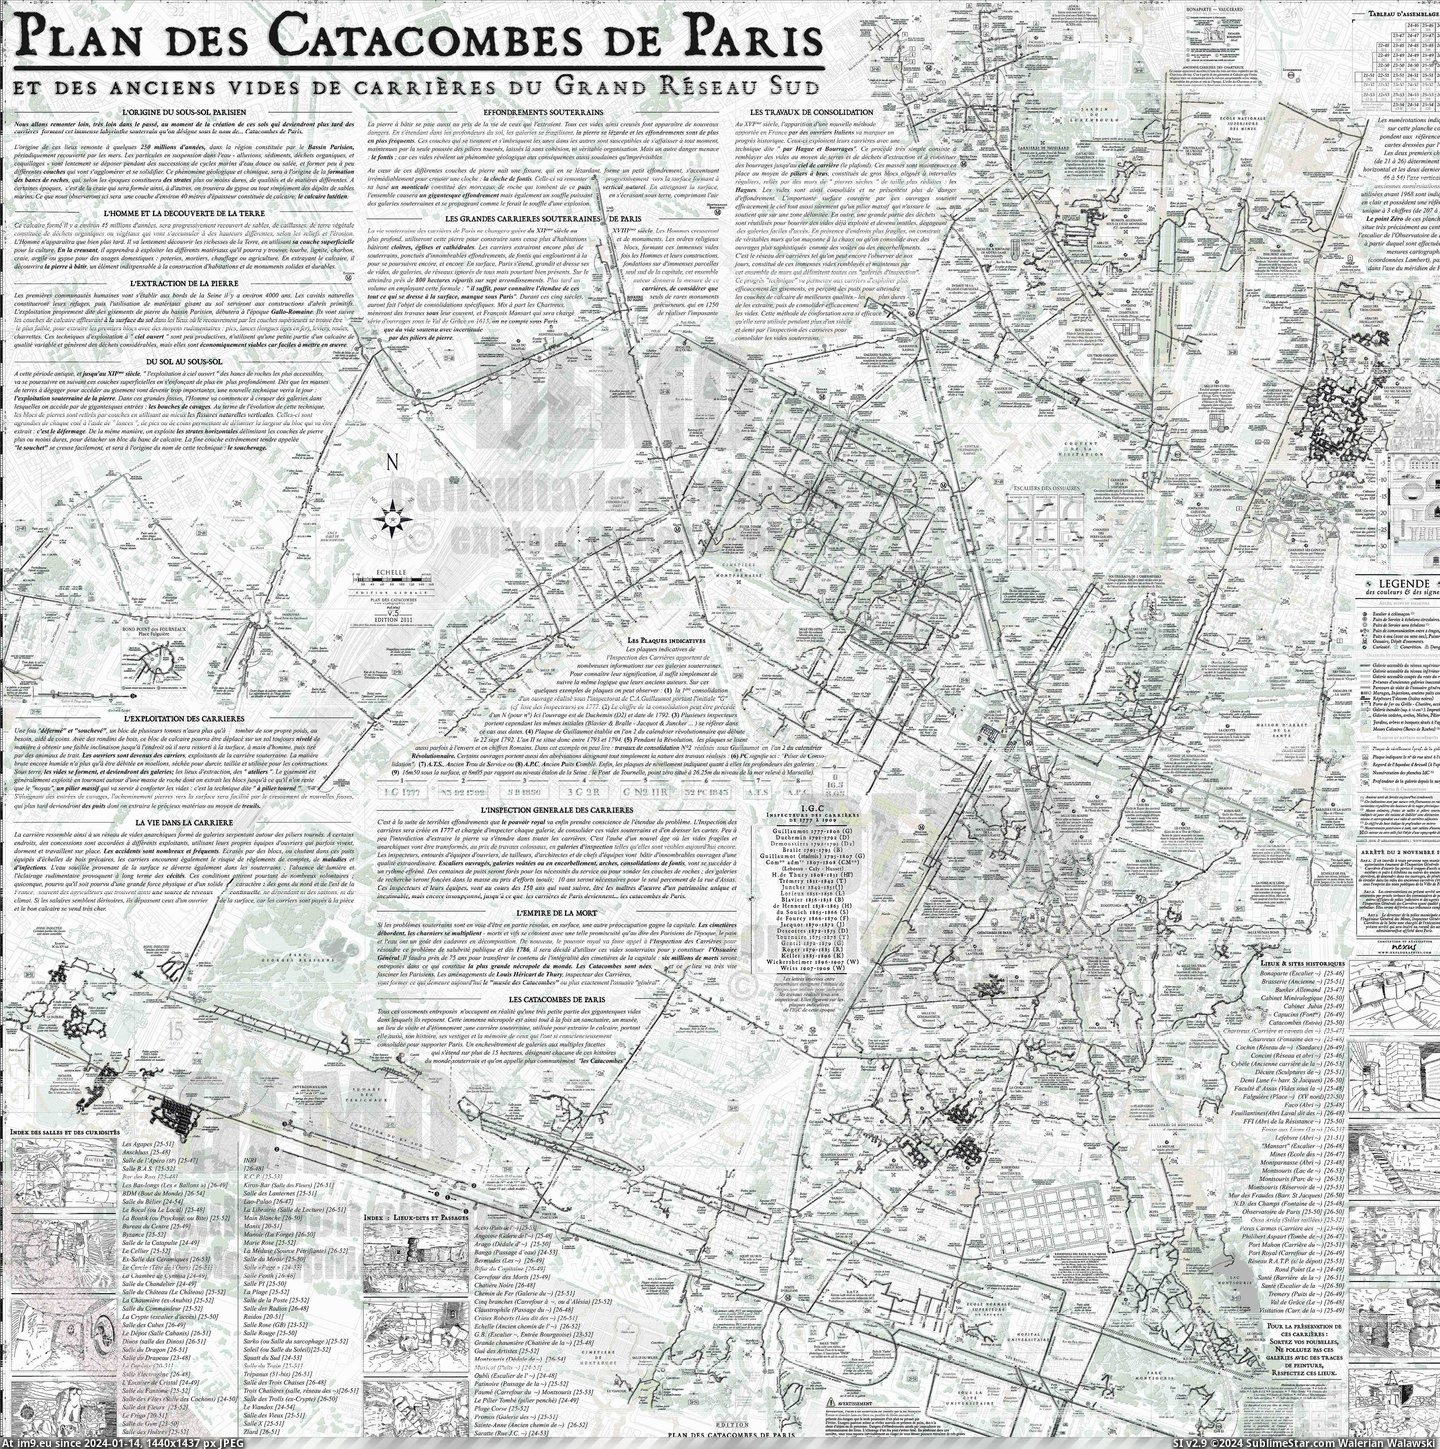 #Paris  #Catacombs [Mapporn] Catacombs of Paris [5888x5888] Pic. (Obraz z album My r/MAPS favs))